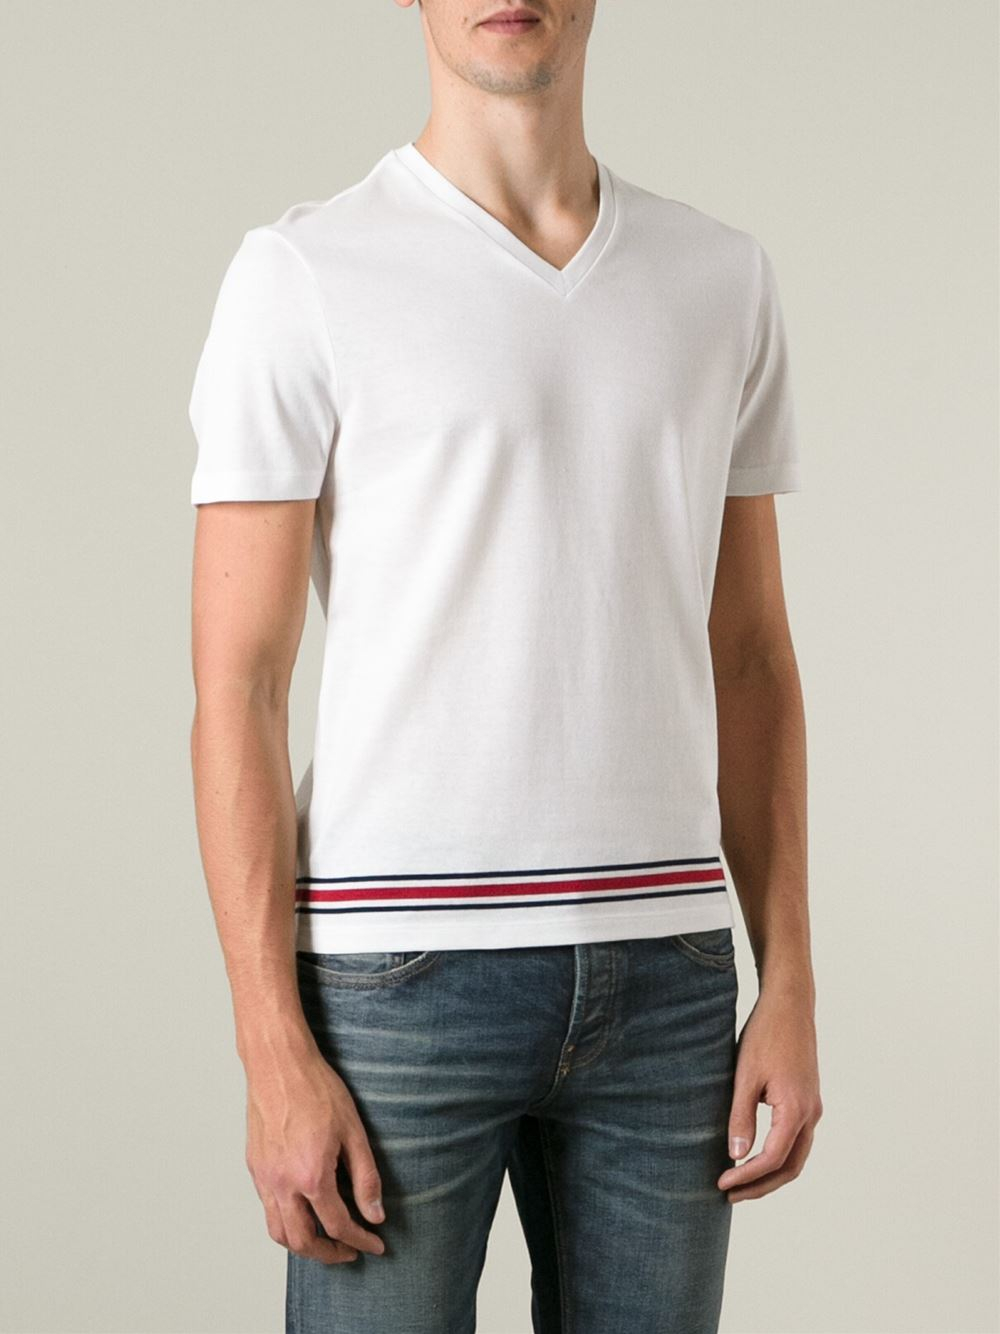 Gucci V-Neck T-Shirt in White for Men - Lyst